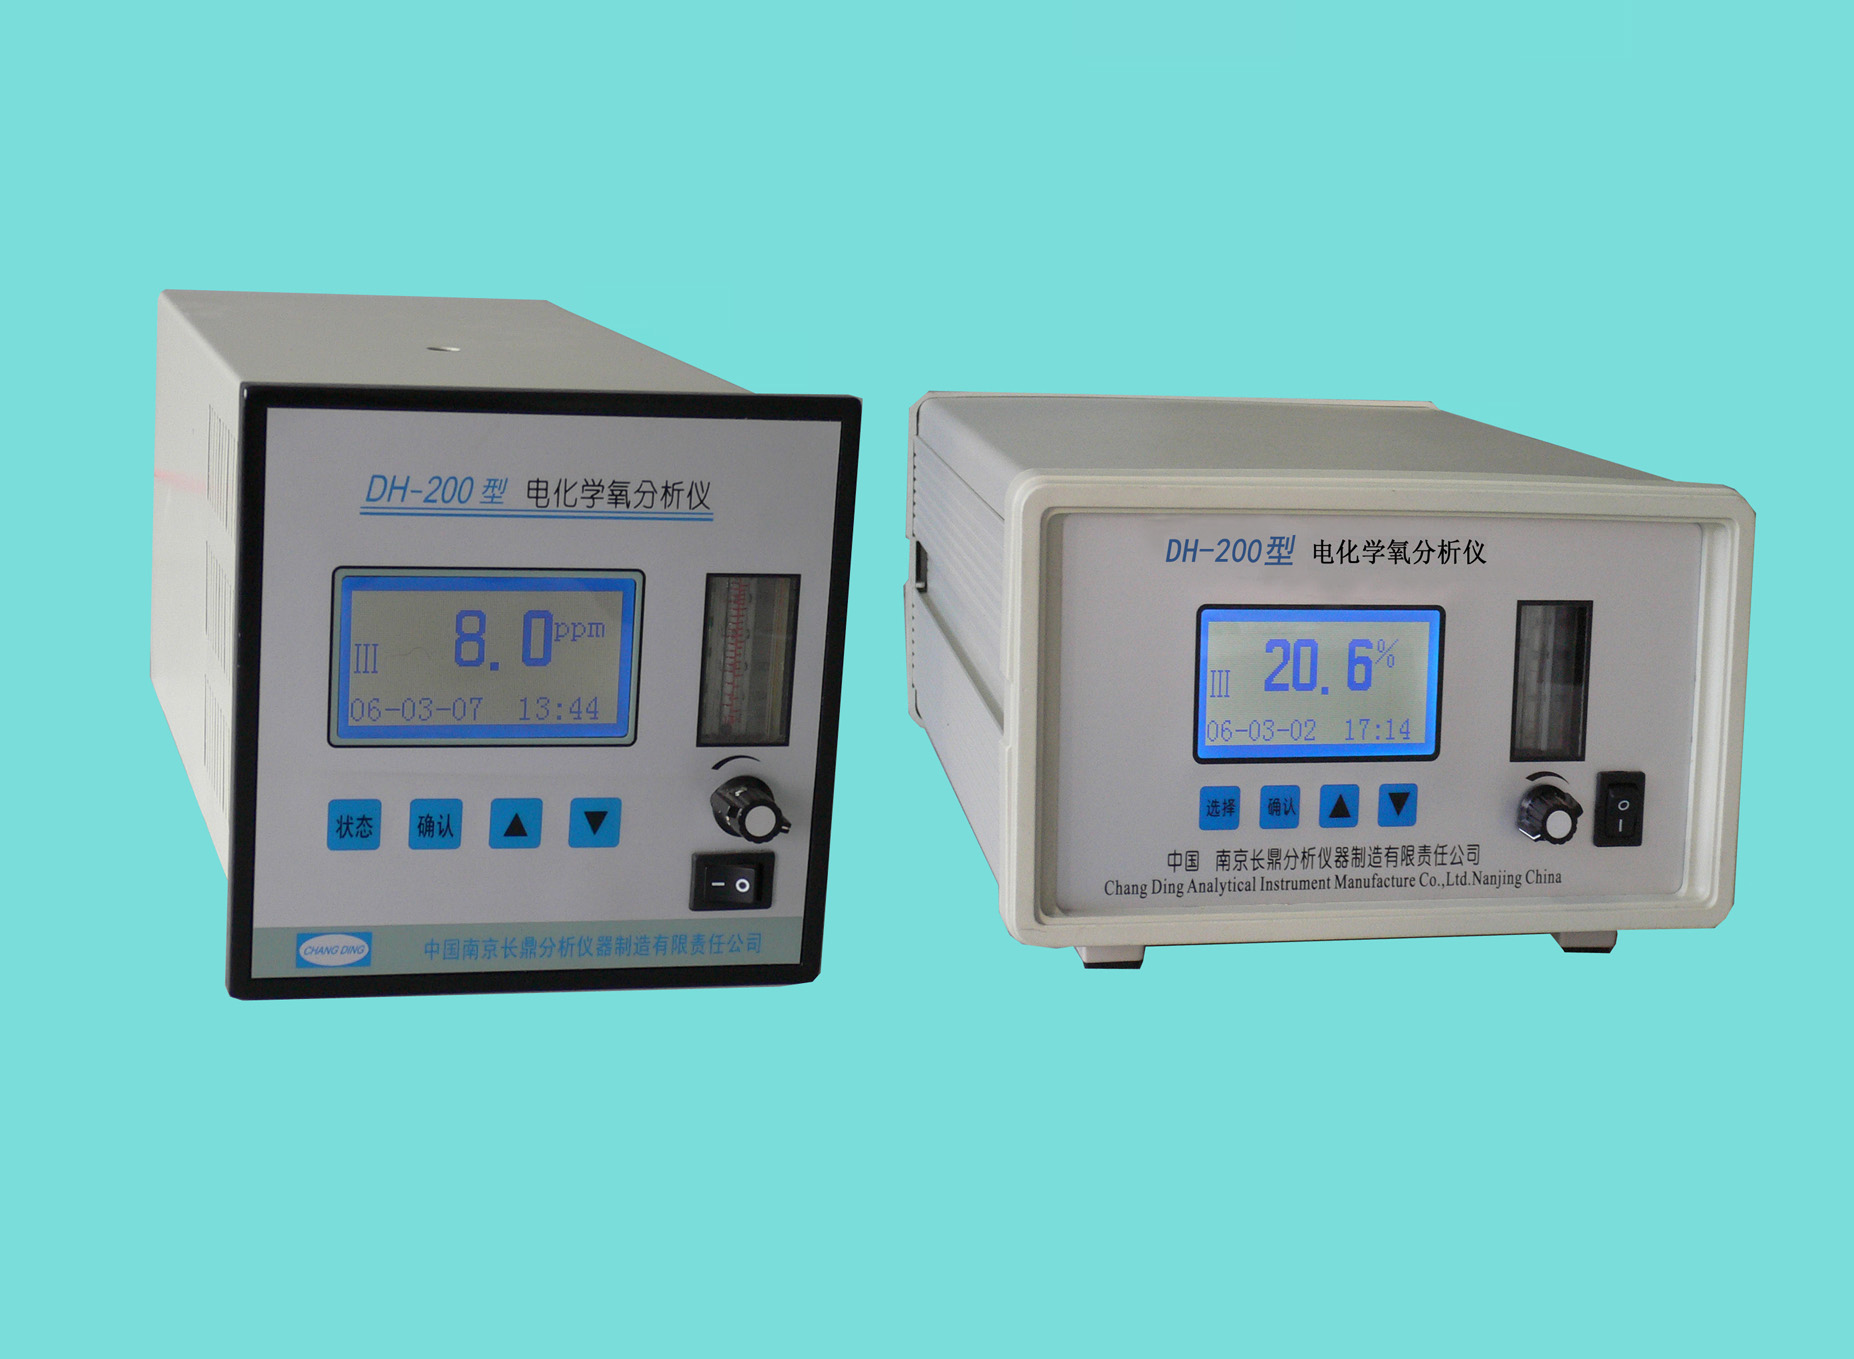 DH-200 electrochemical analyzer